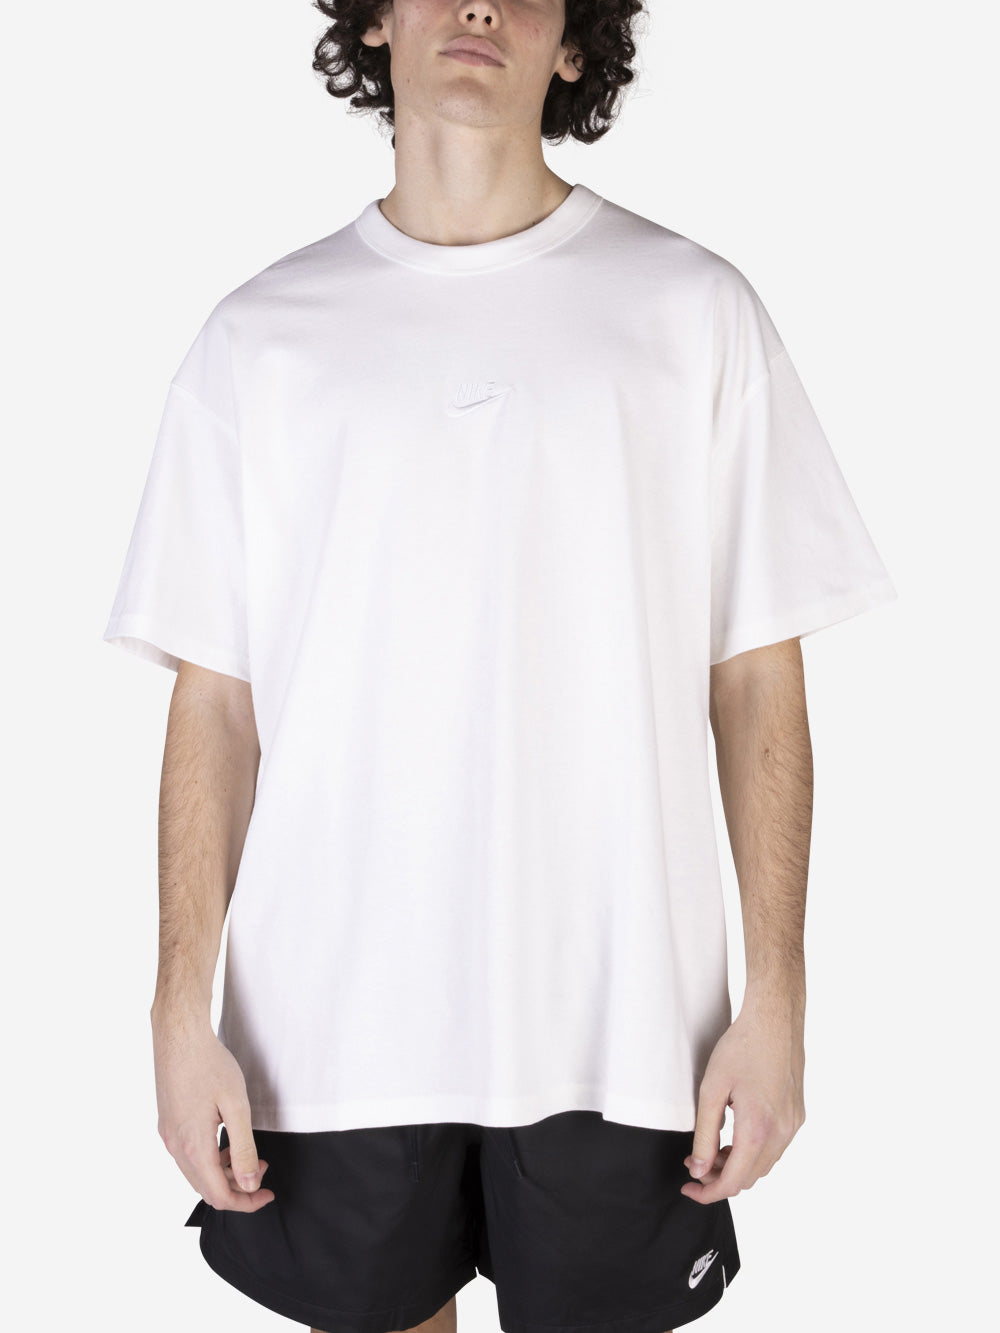 NIKE T-shirt Premium Essentials Bianco Urbanstaroma